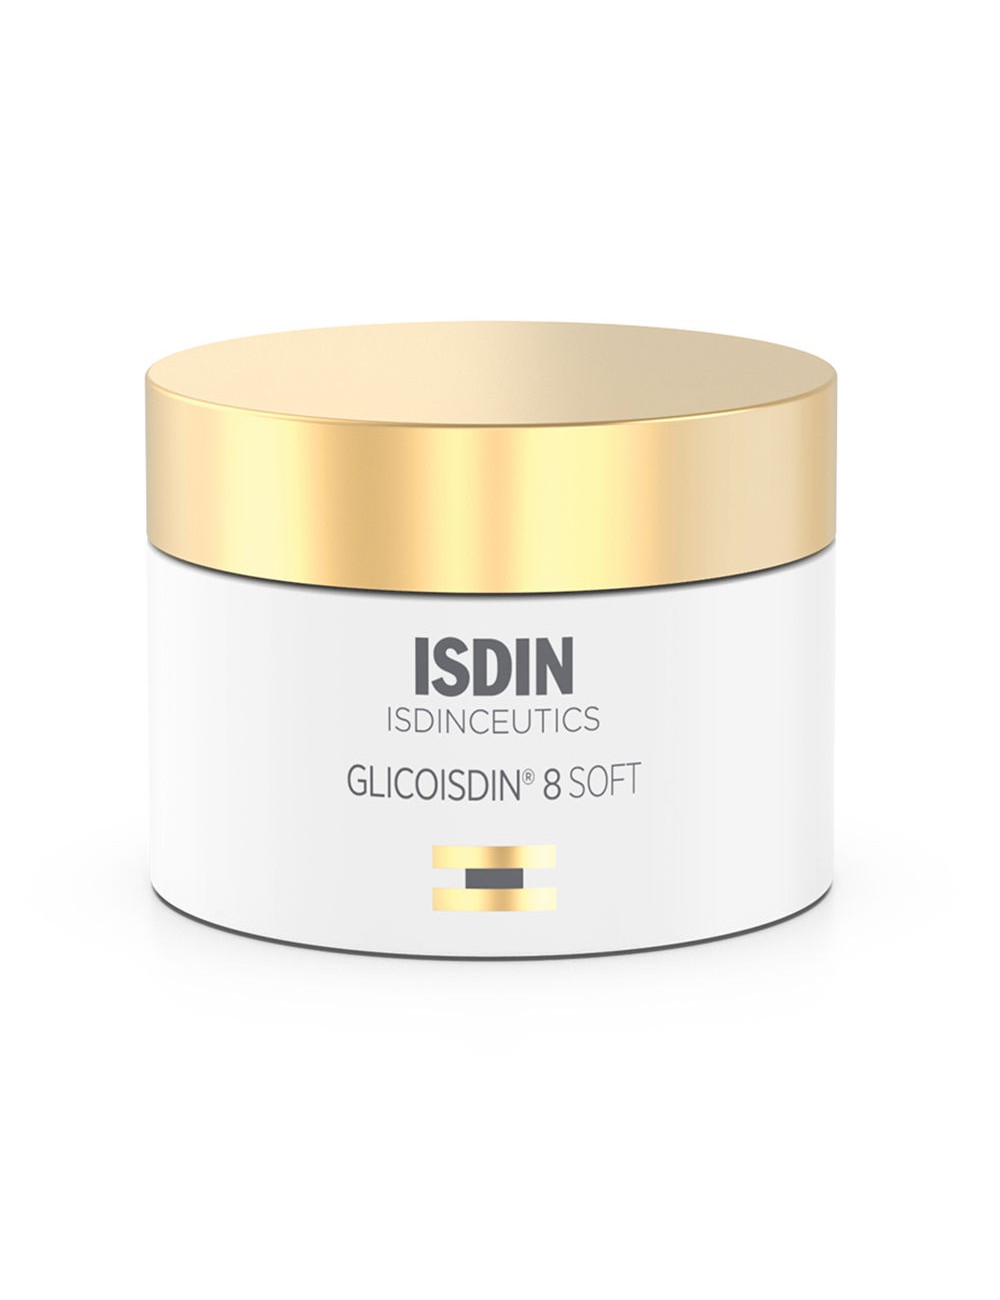 ISDINCEUTICS GLICOISDIN 8 SOFT facial peeling 50 ml